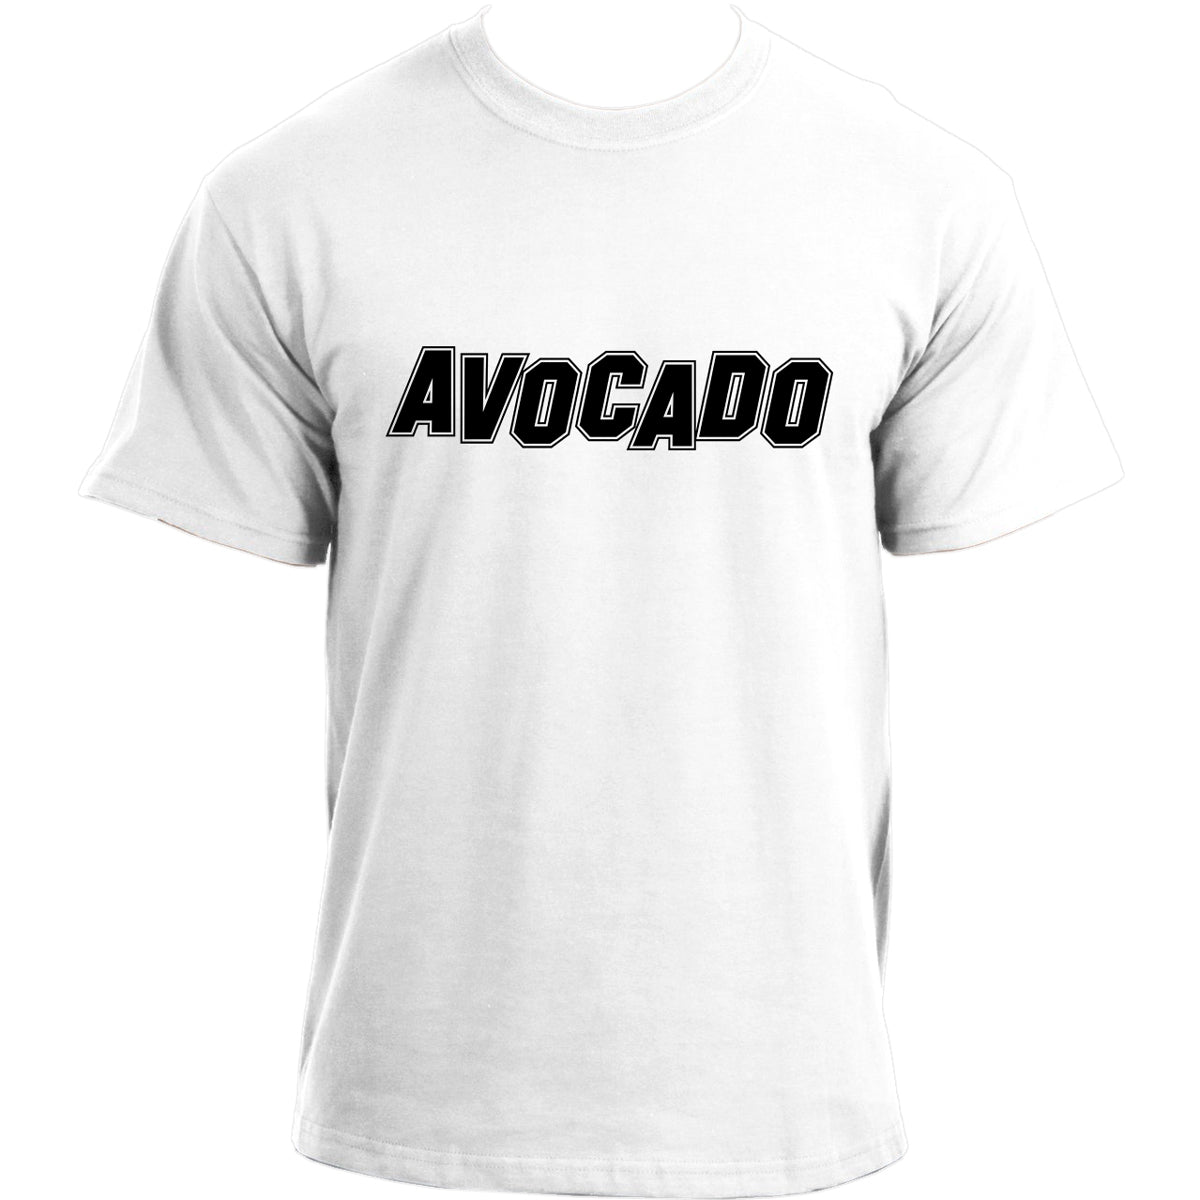 Avocado Tshirt Old School Funny Vegan T Shirt For Men